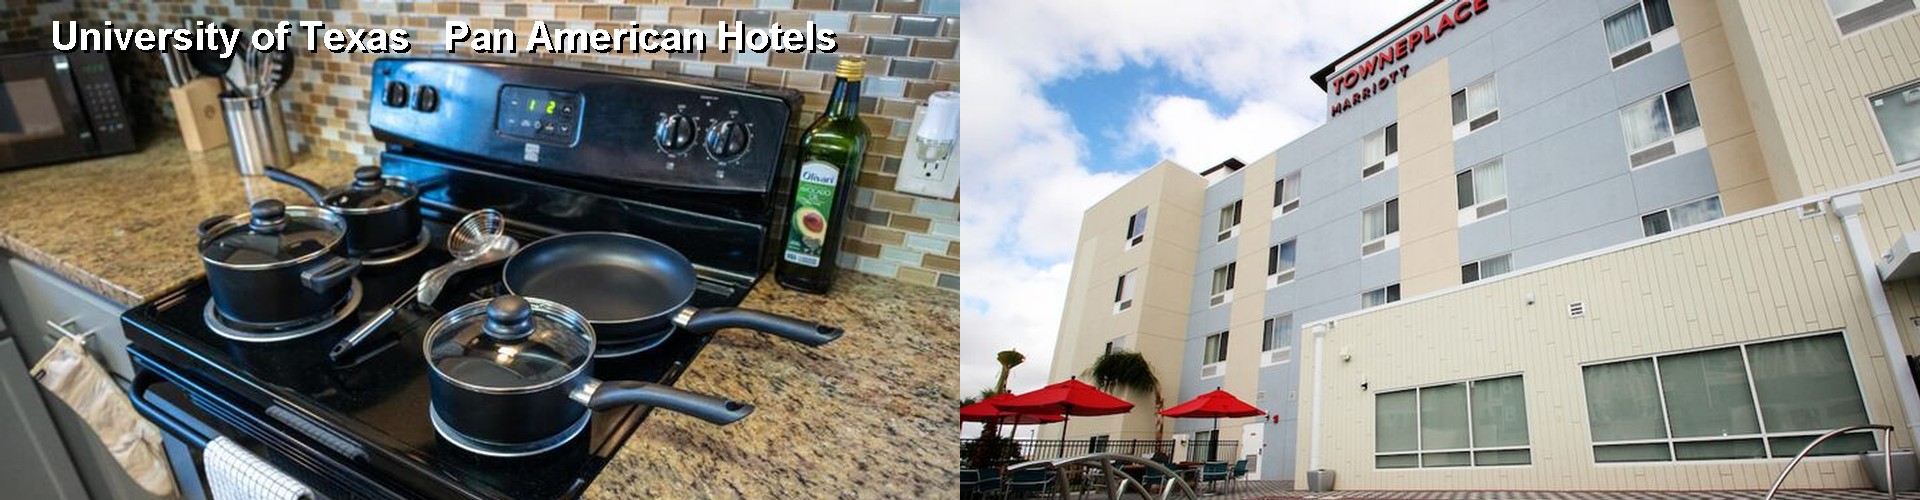 5 Best Hotels near University of Texas   Pan American